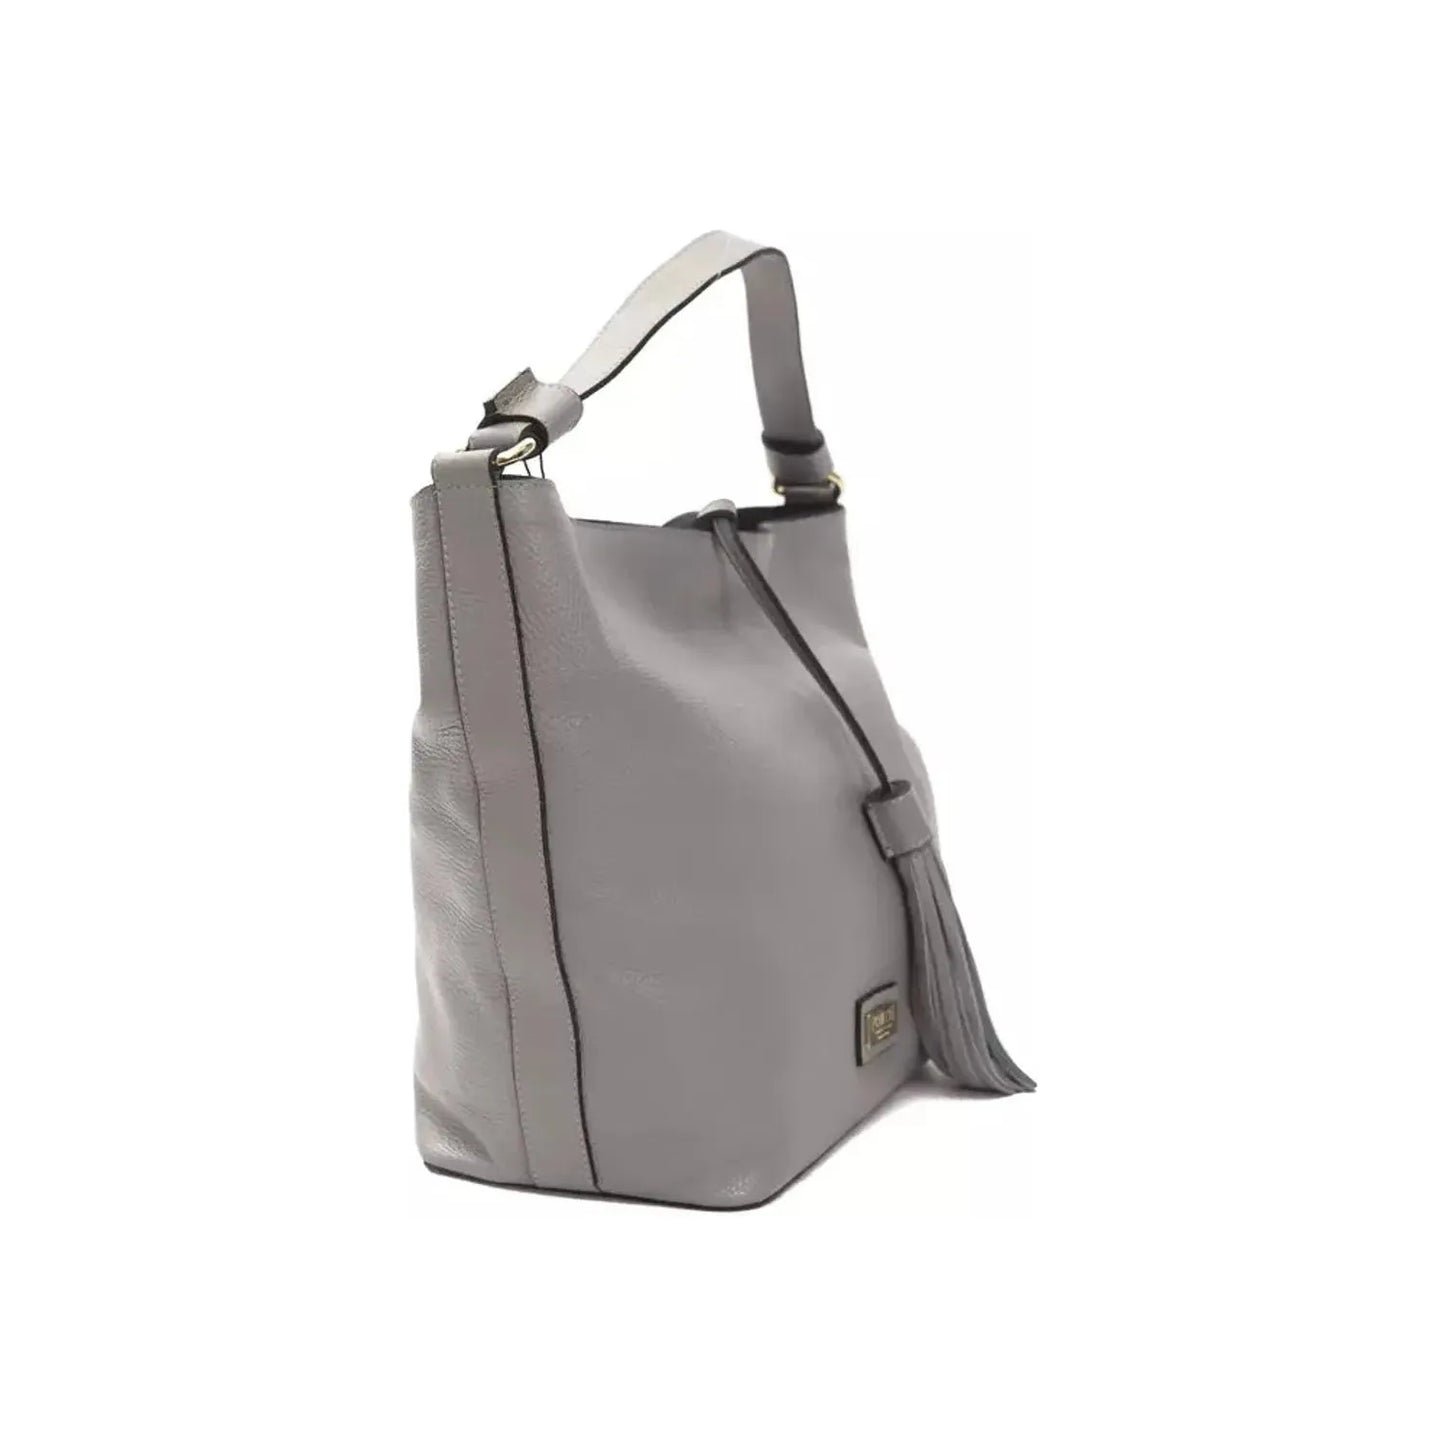 Pompei Donatella Chic Gray Leather Shoulder Bag - Adjustable Strap WOMAN SHOULDER BAGS gray-leather-shoulder-bag-1 stock_product_image_5805_1292343262-24-b3144a86-649.webp